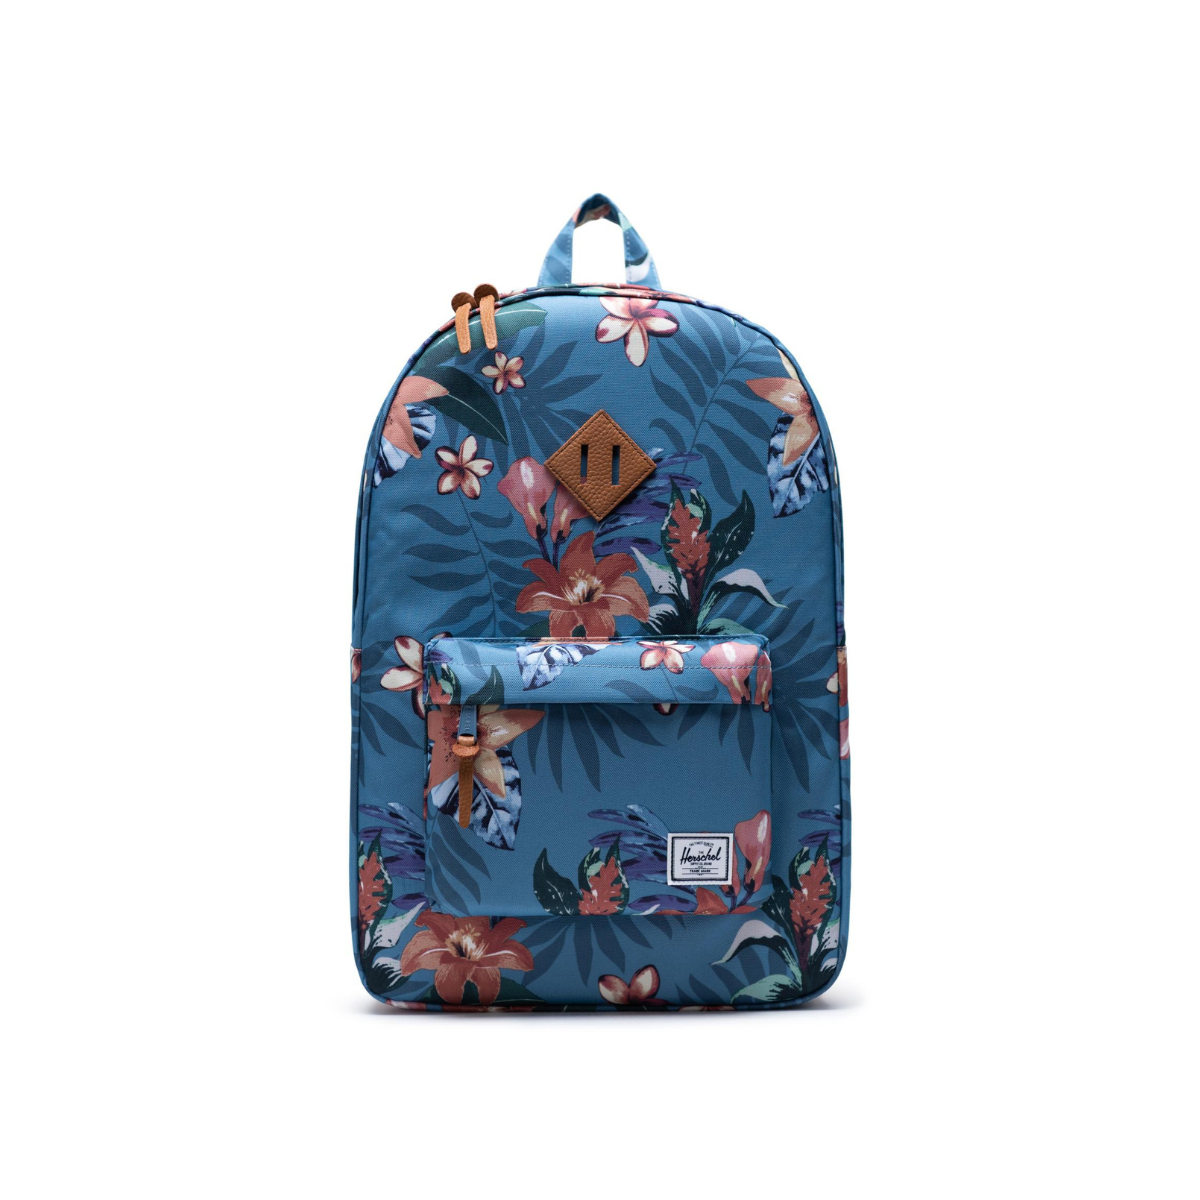 mochila herschel backpack comprar en tu tienda online Buscalibre